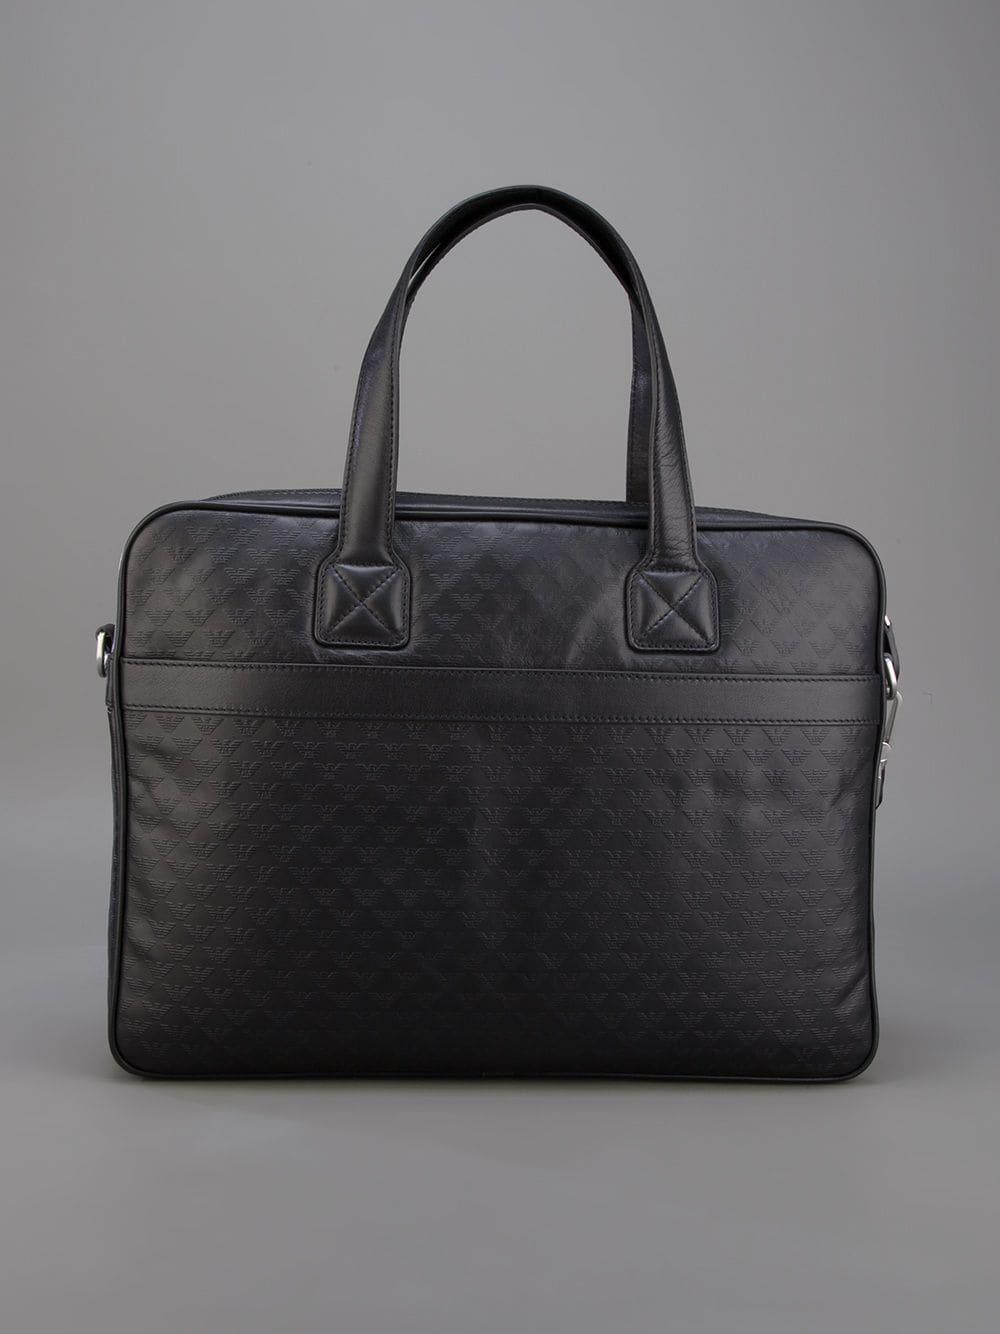 Emporio Armani Leather Logo Embossed Laptop Bag in Black for Men - Lyst